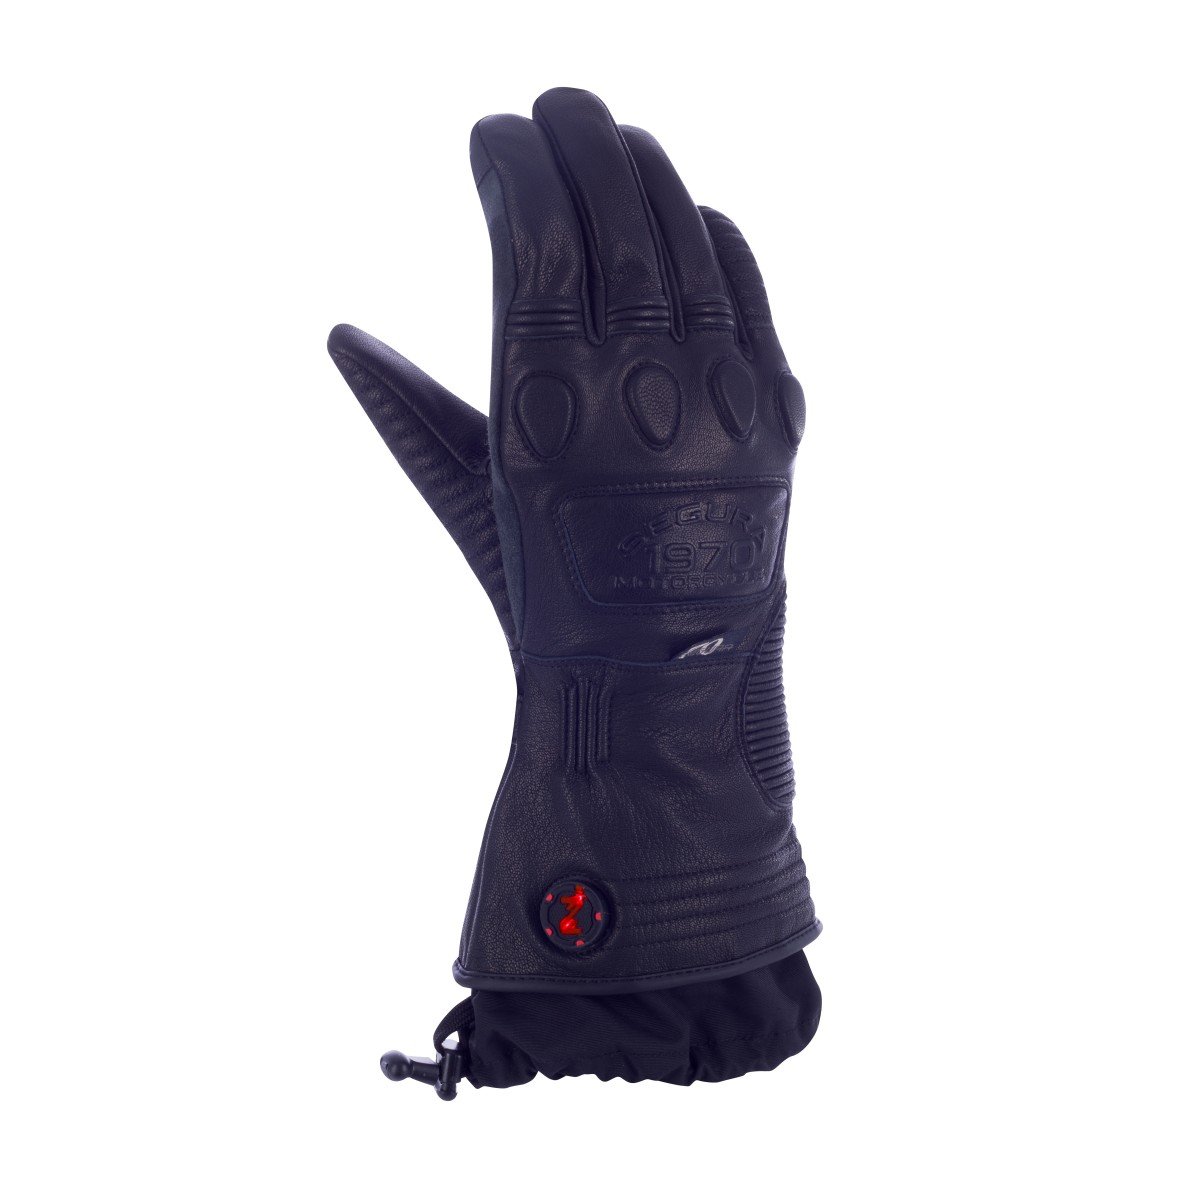 Image of Segura Shiro Black Heated Gloves Size T8 EN